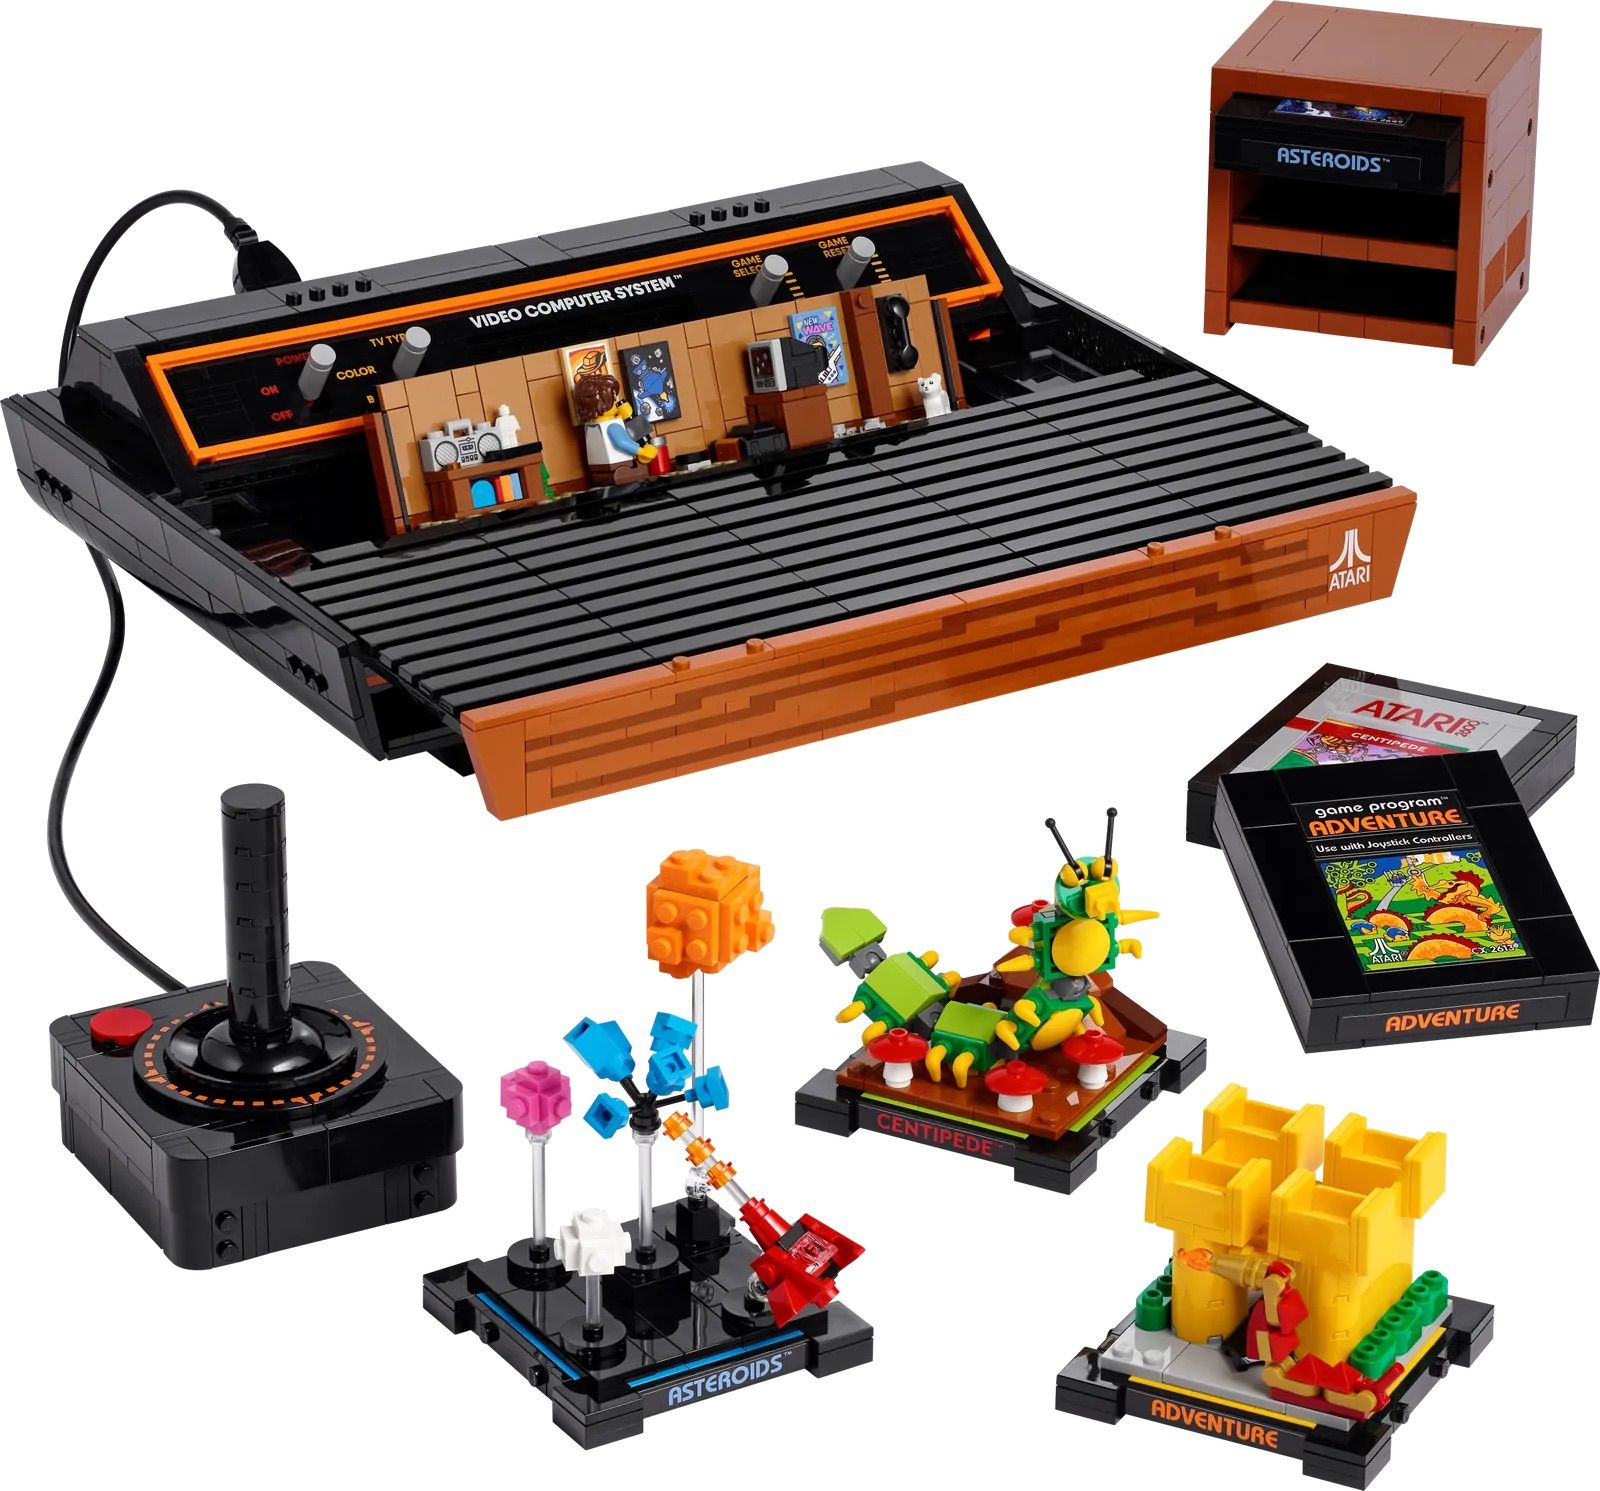 LEGO Atari set